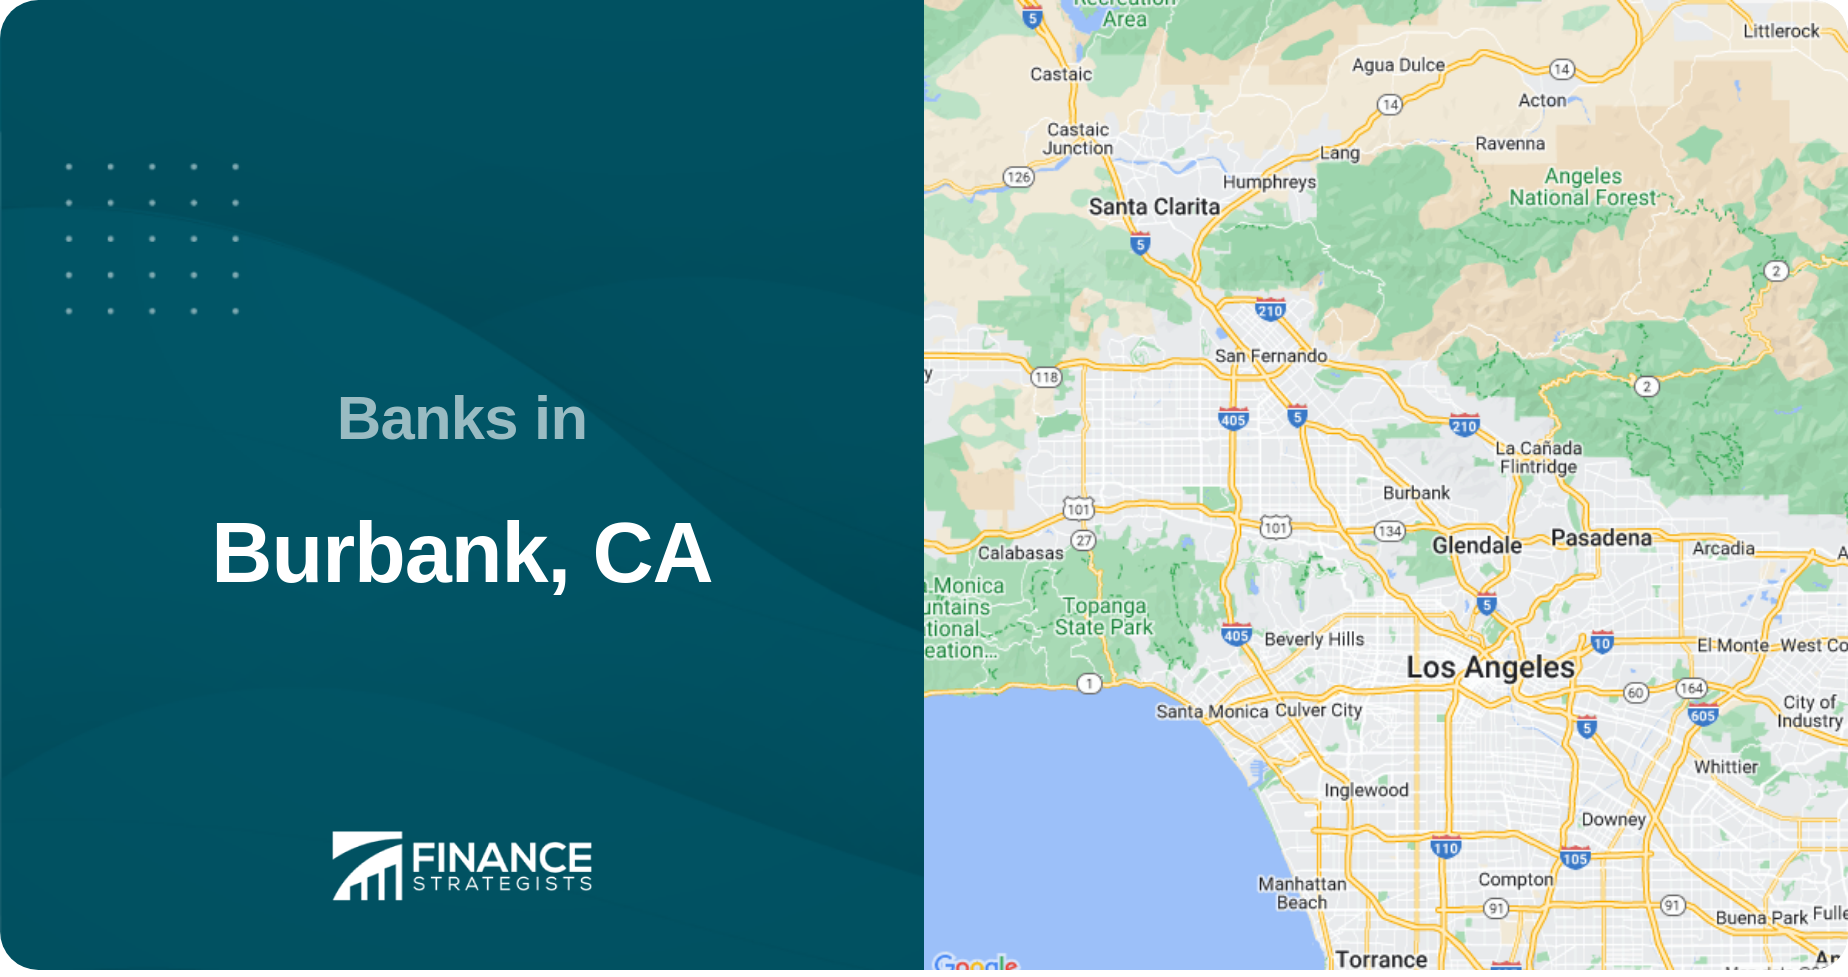 Banks in Burbank, CA